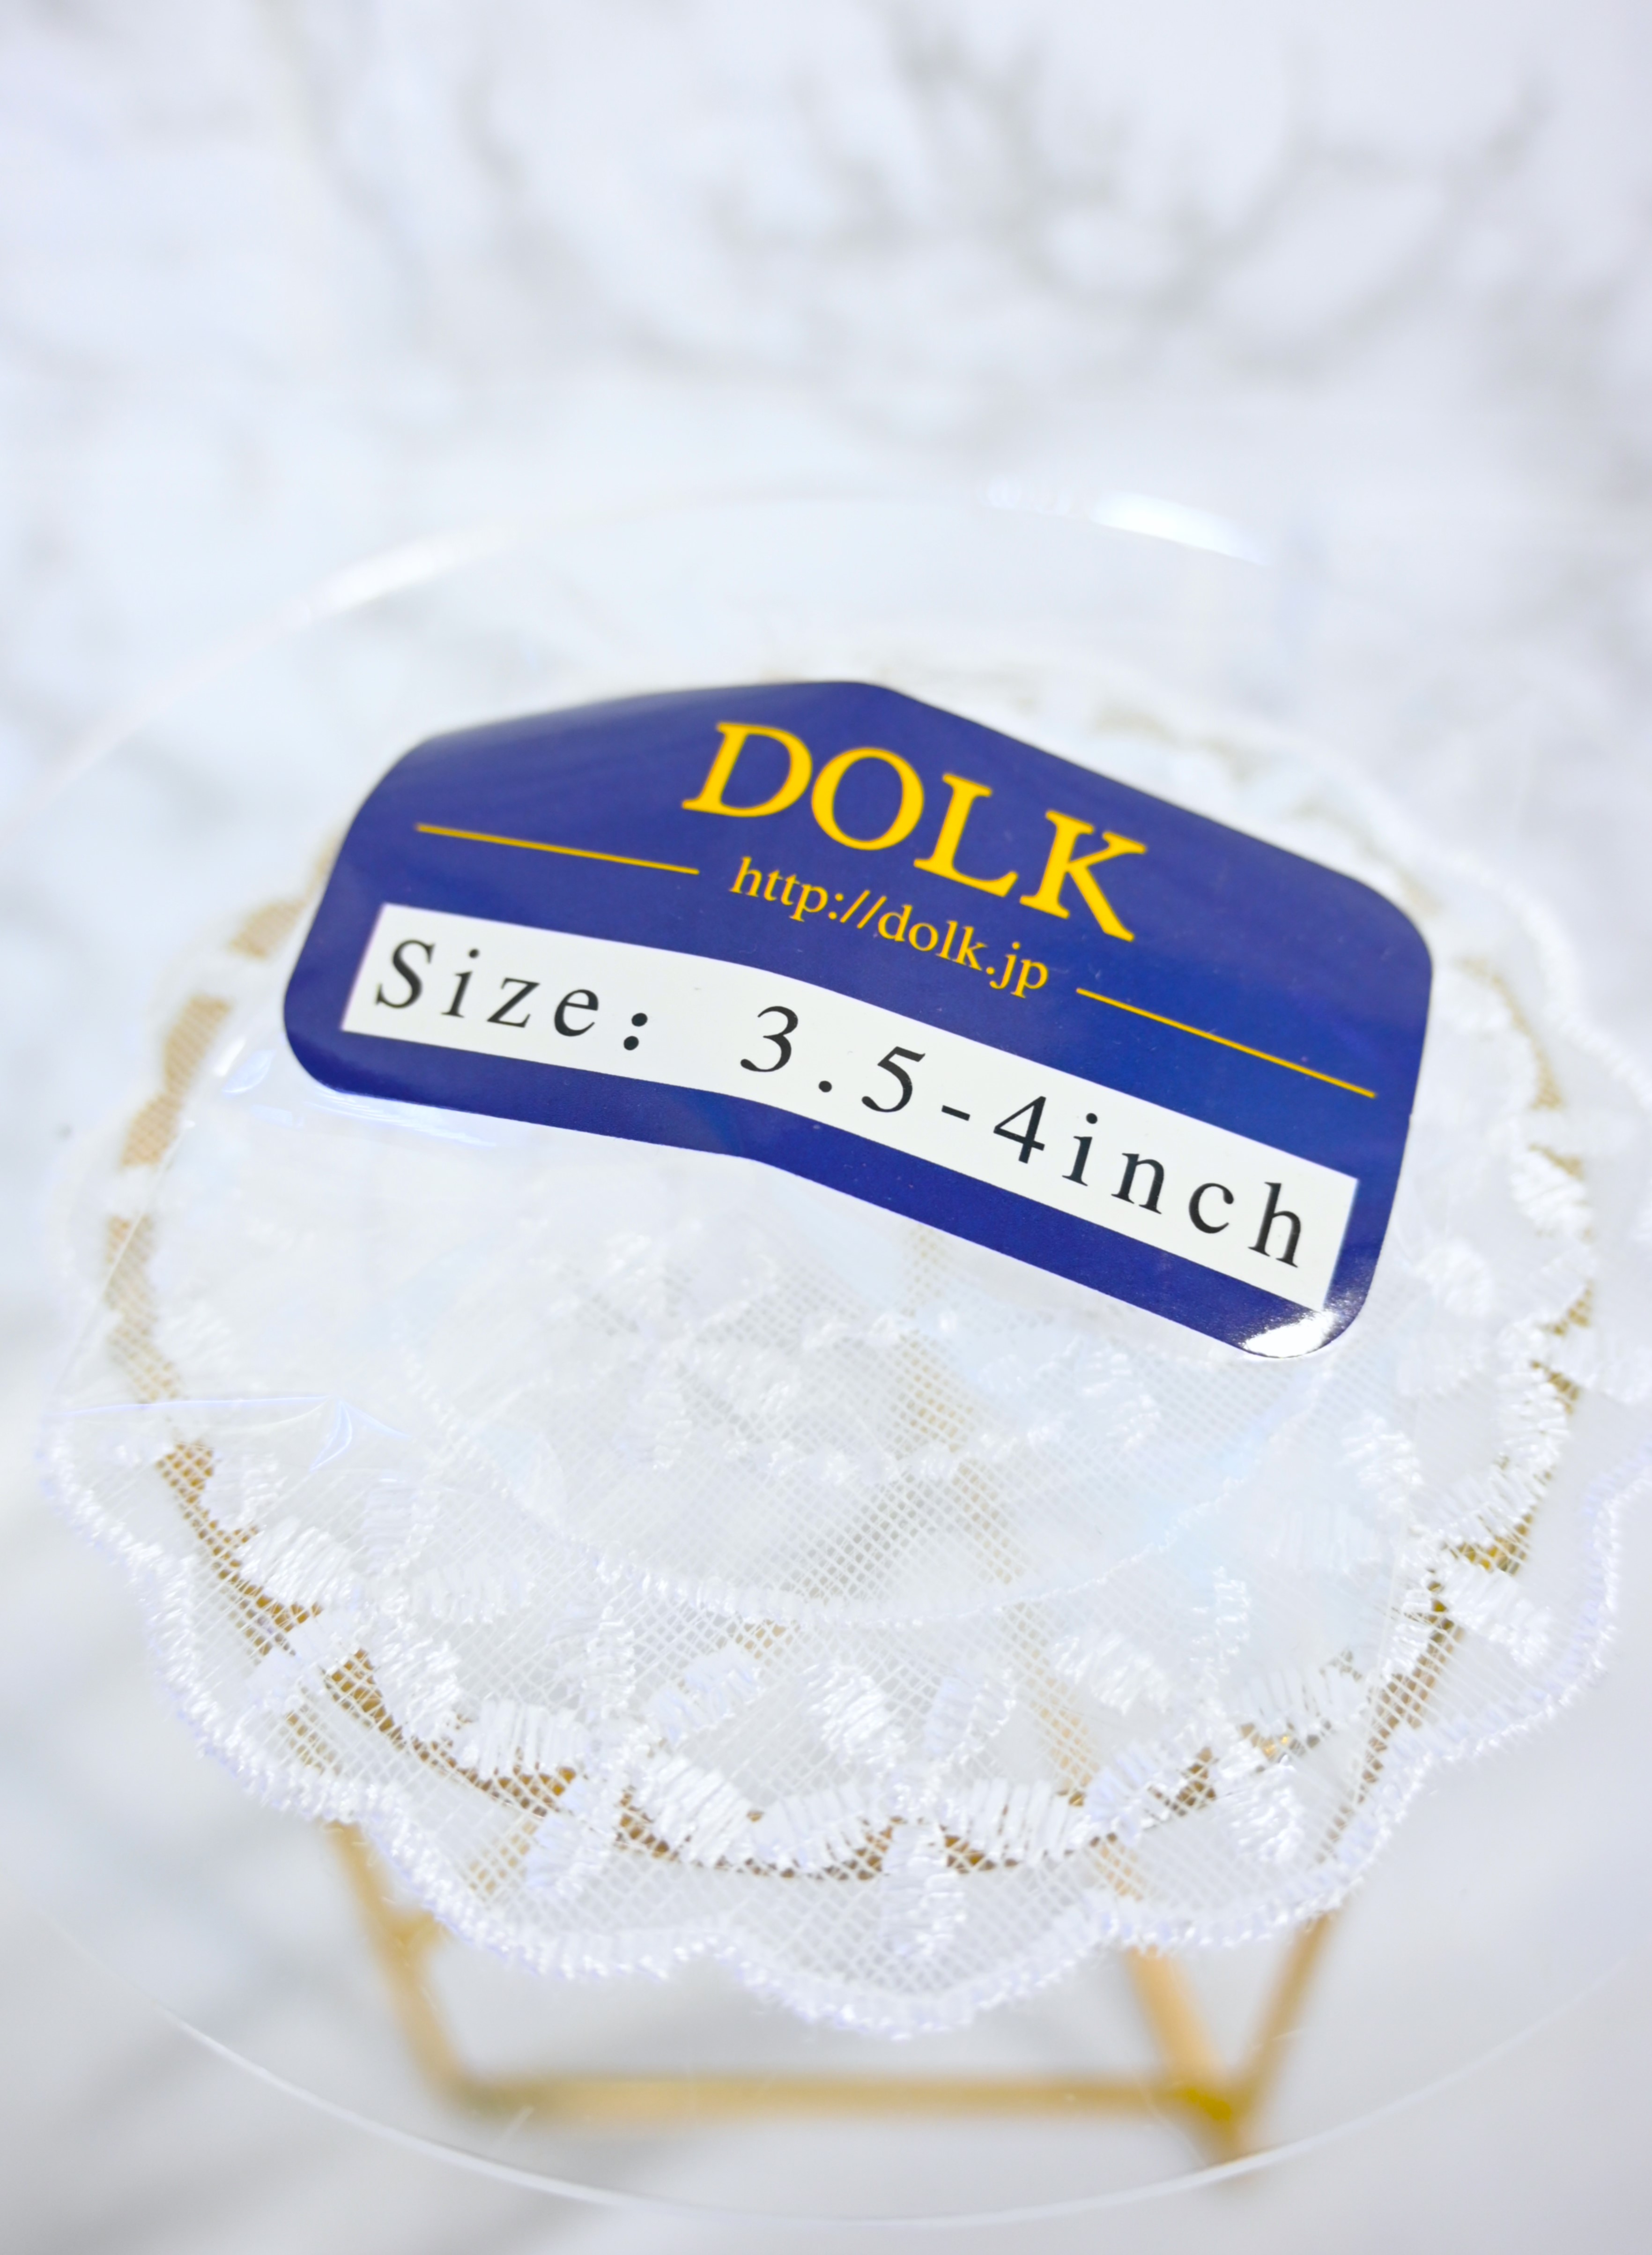 【3.5inch-4inch】 DOLK / シリコンキャップ